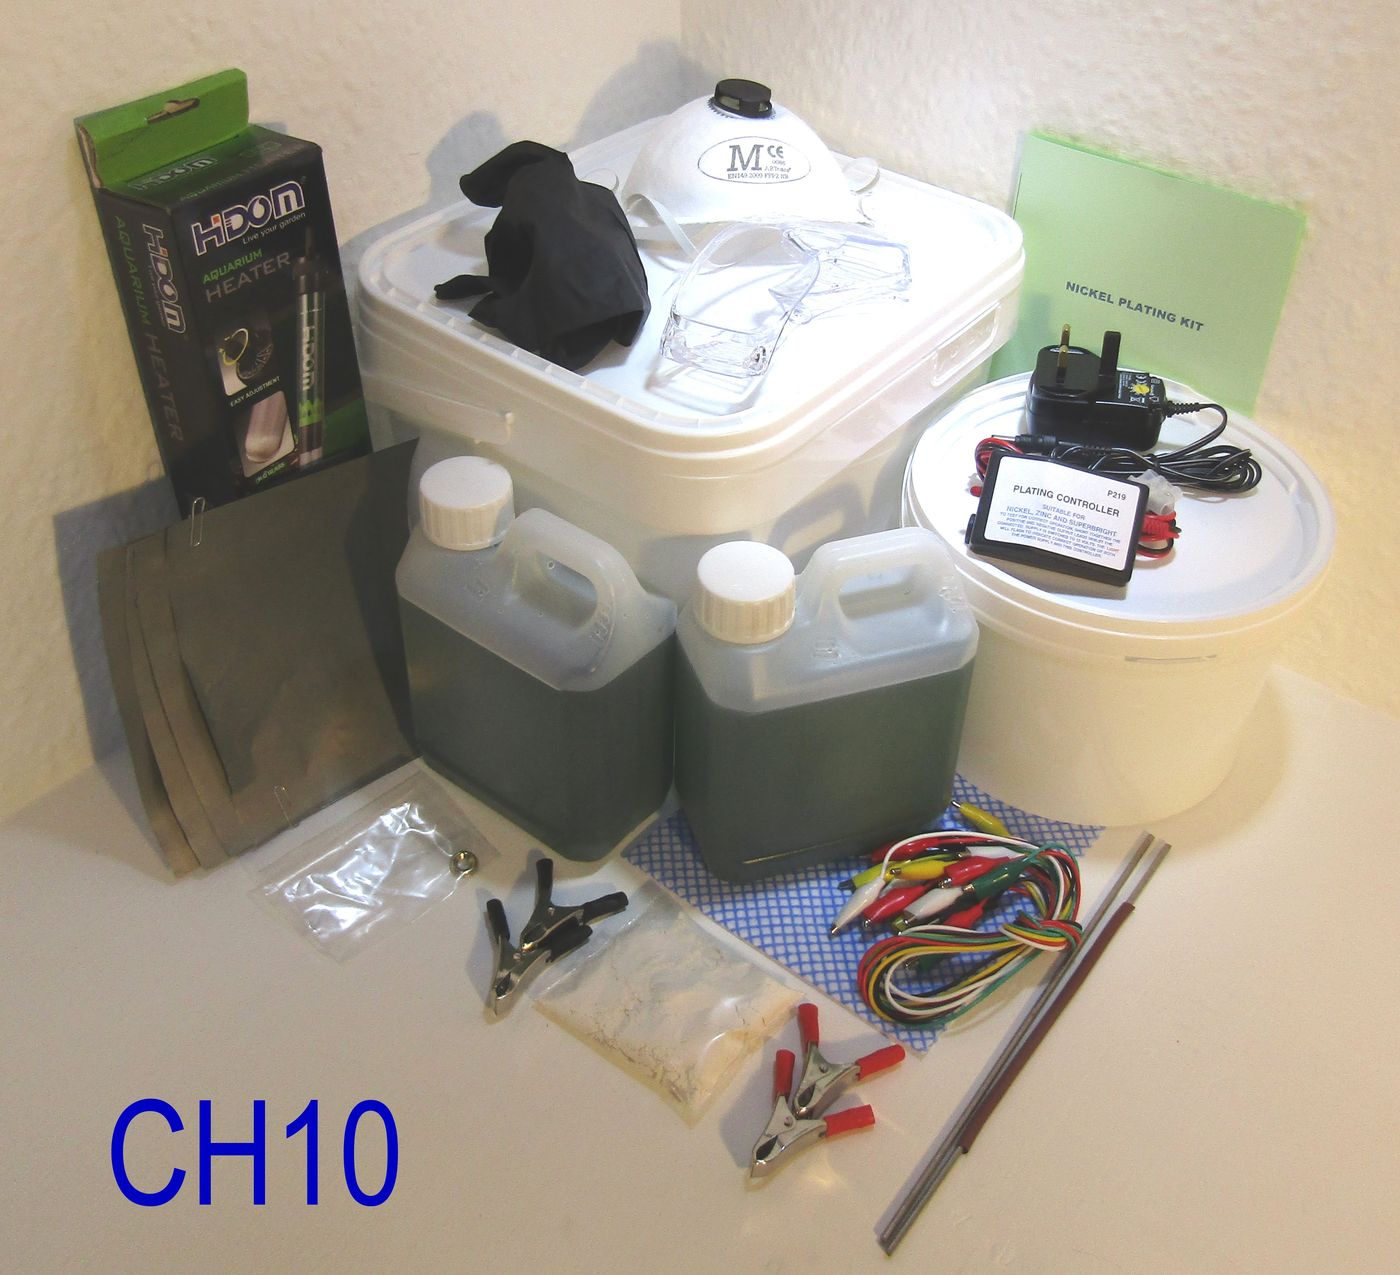 Bright Nickel Plating Kit 2 Litre - Chronos Engineering Supplies